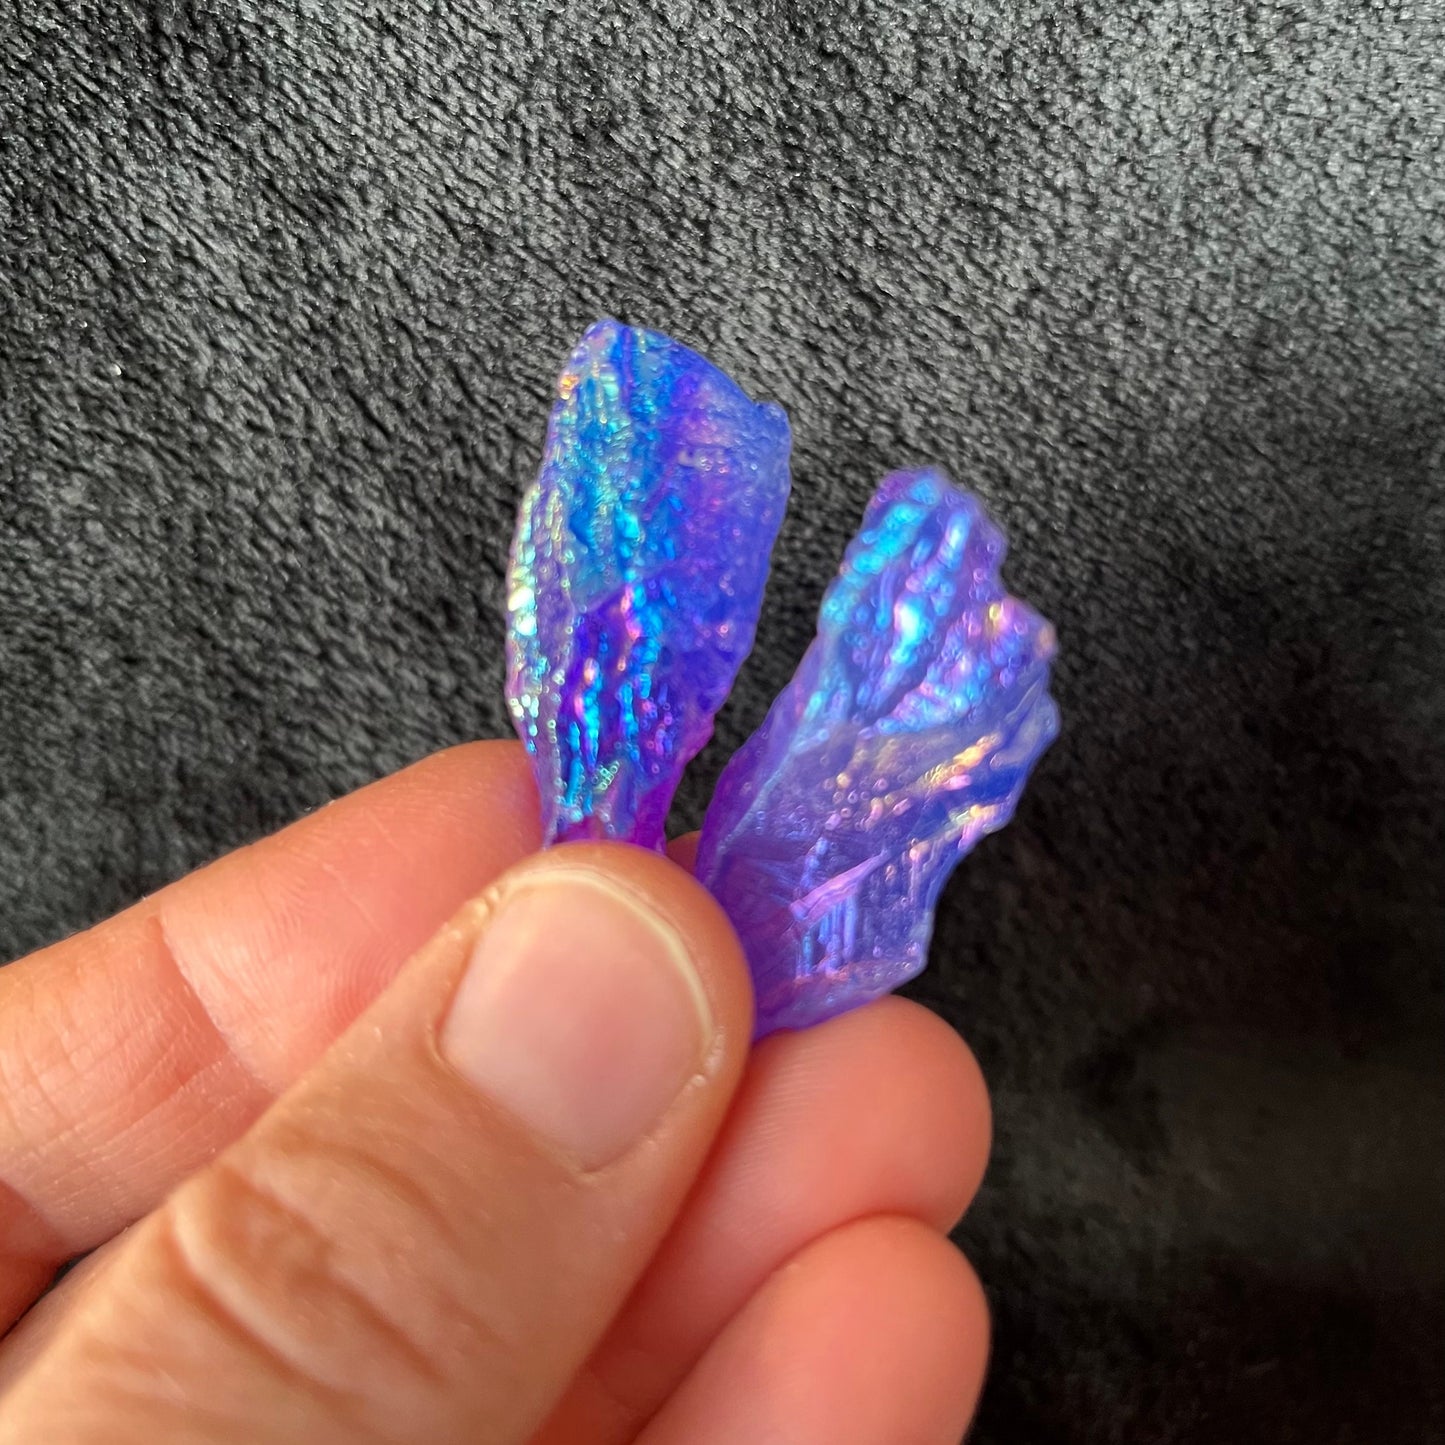 Unicorn Poop Crystal (Approx. 1" - 1 5/8") Aura Quartz Crystal Point, Blue and Purple 0493